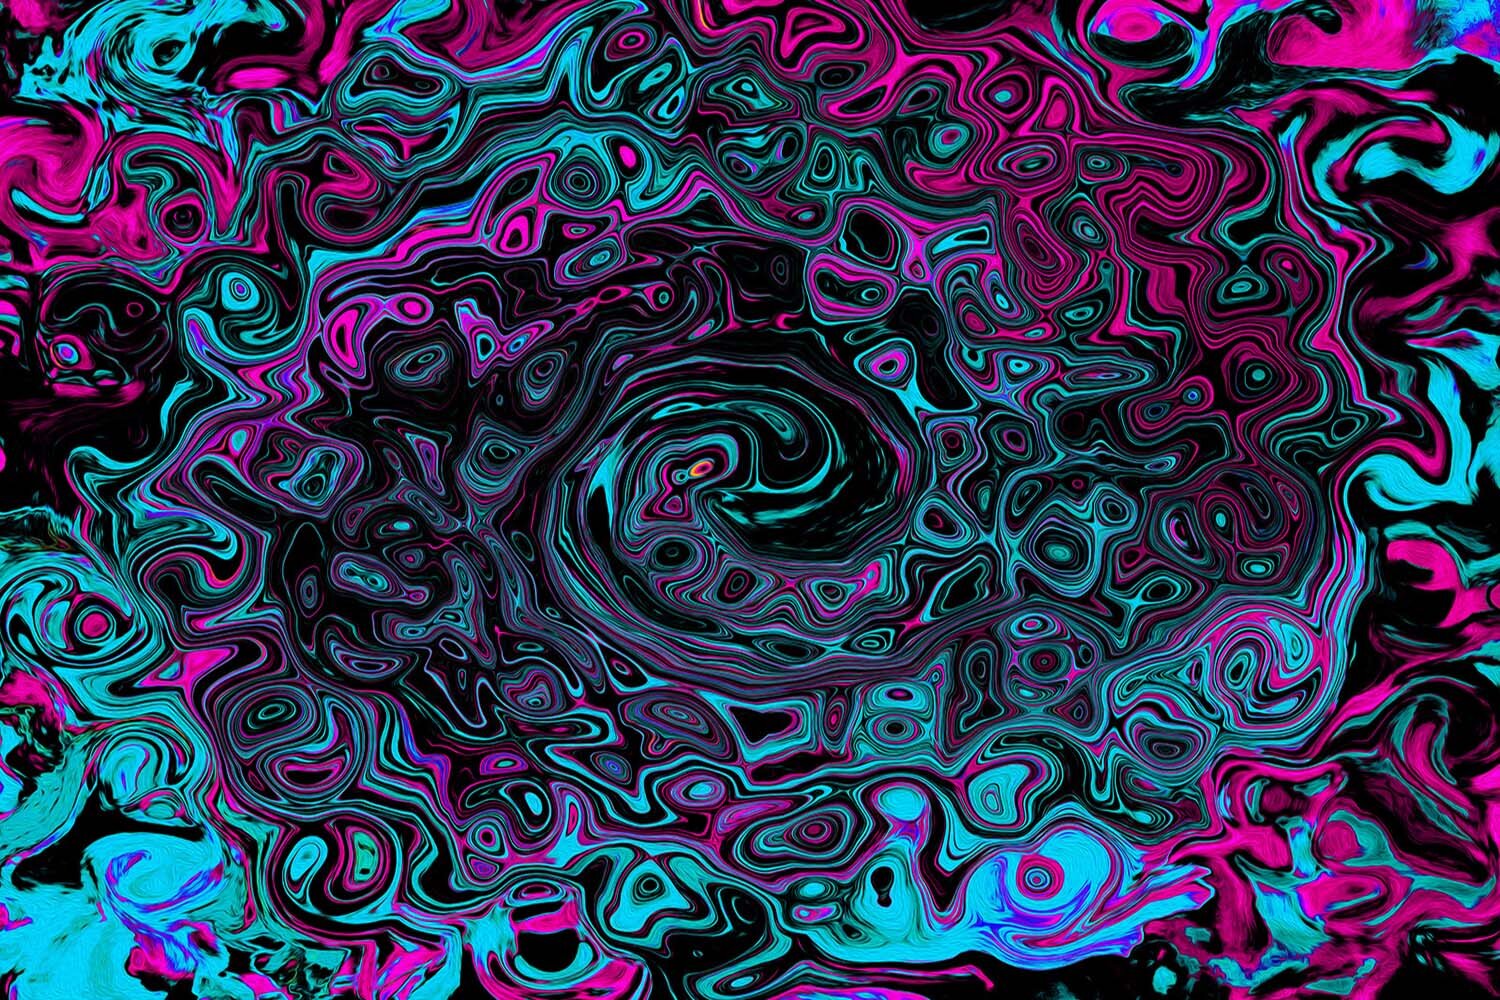 Retro Aqua Magenta and Black Abstract Swirl